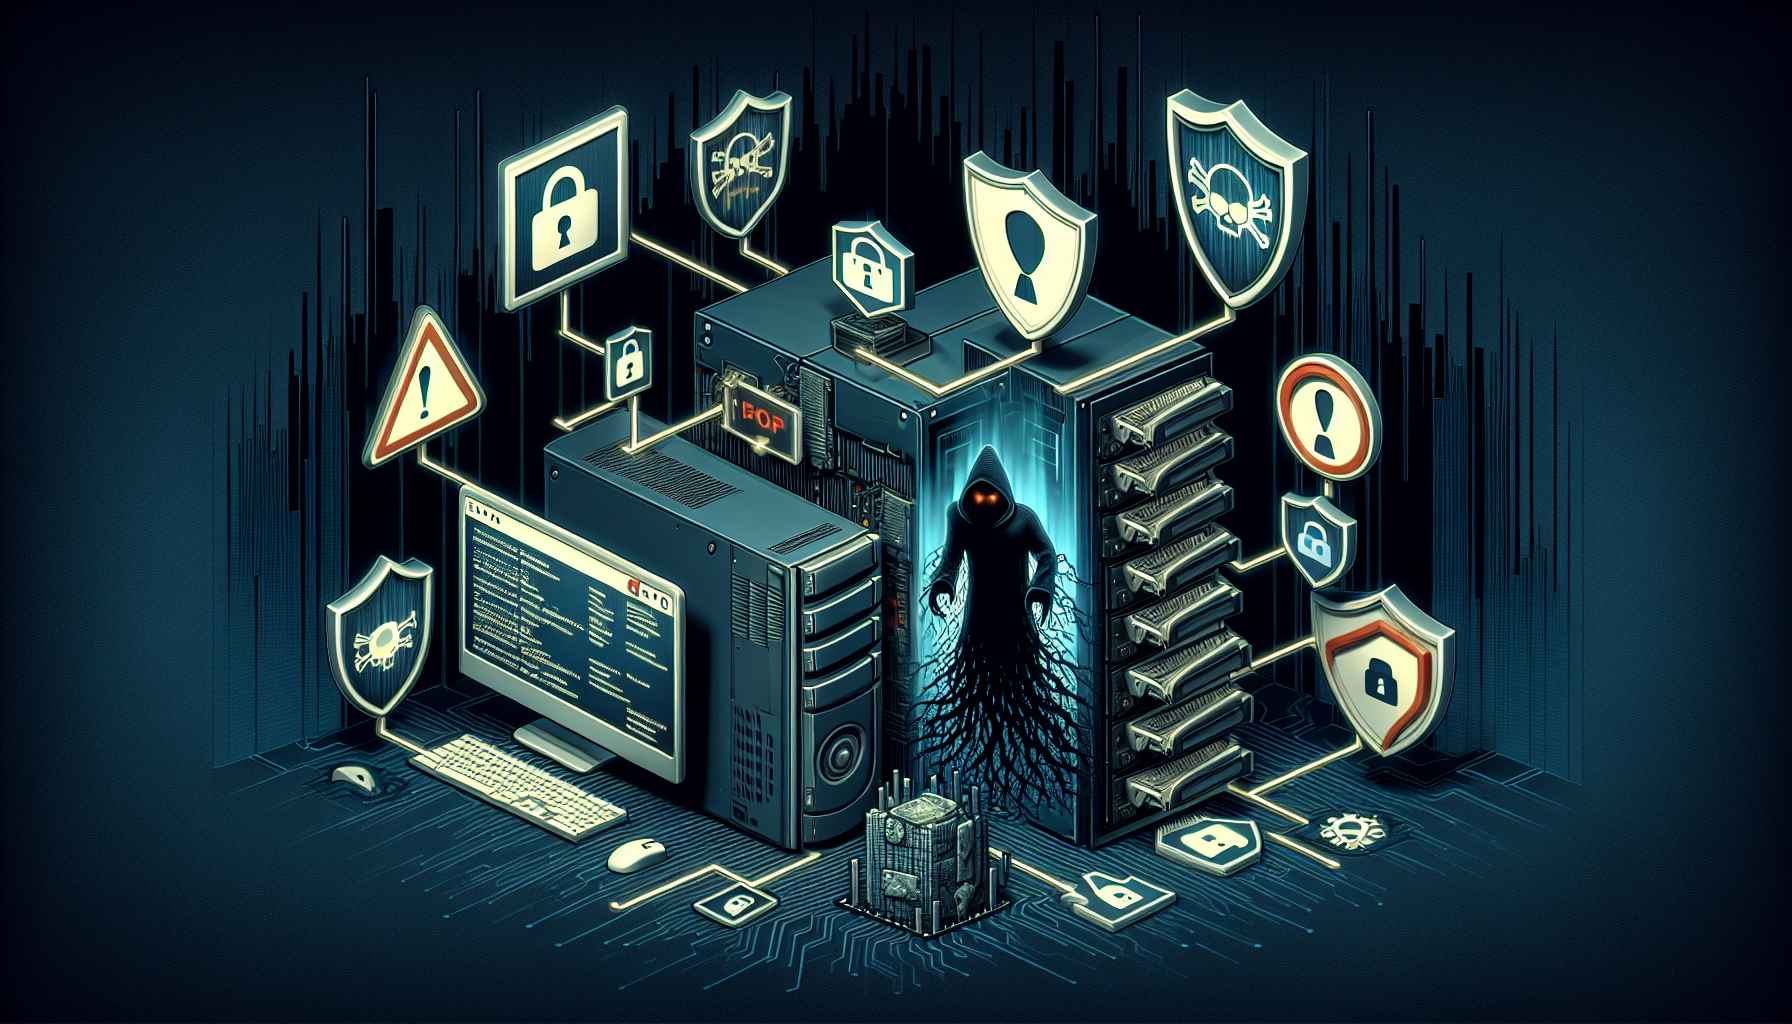 Illustration of DarkMe malware infection process